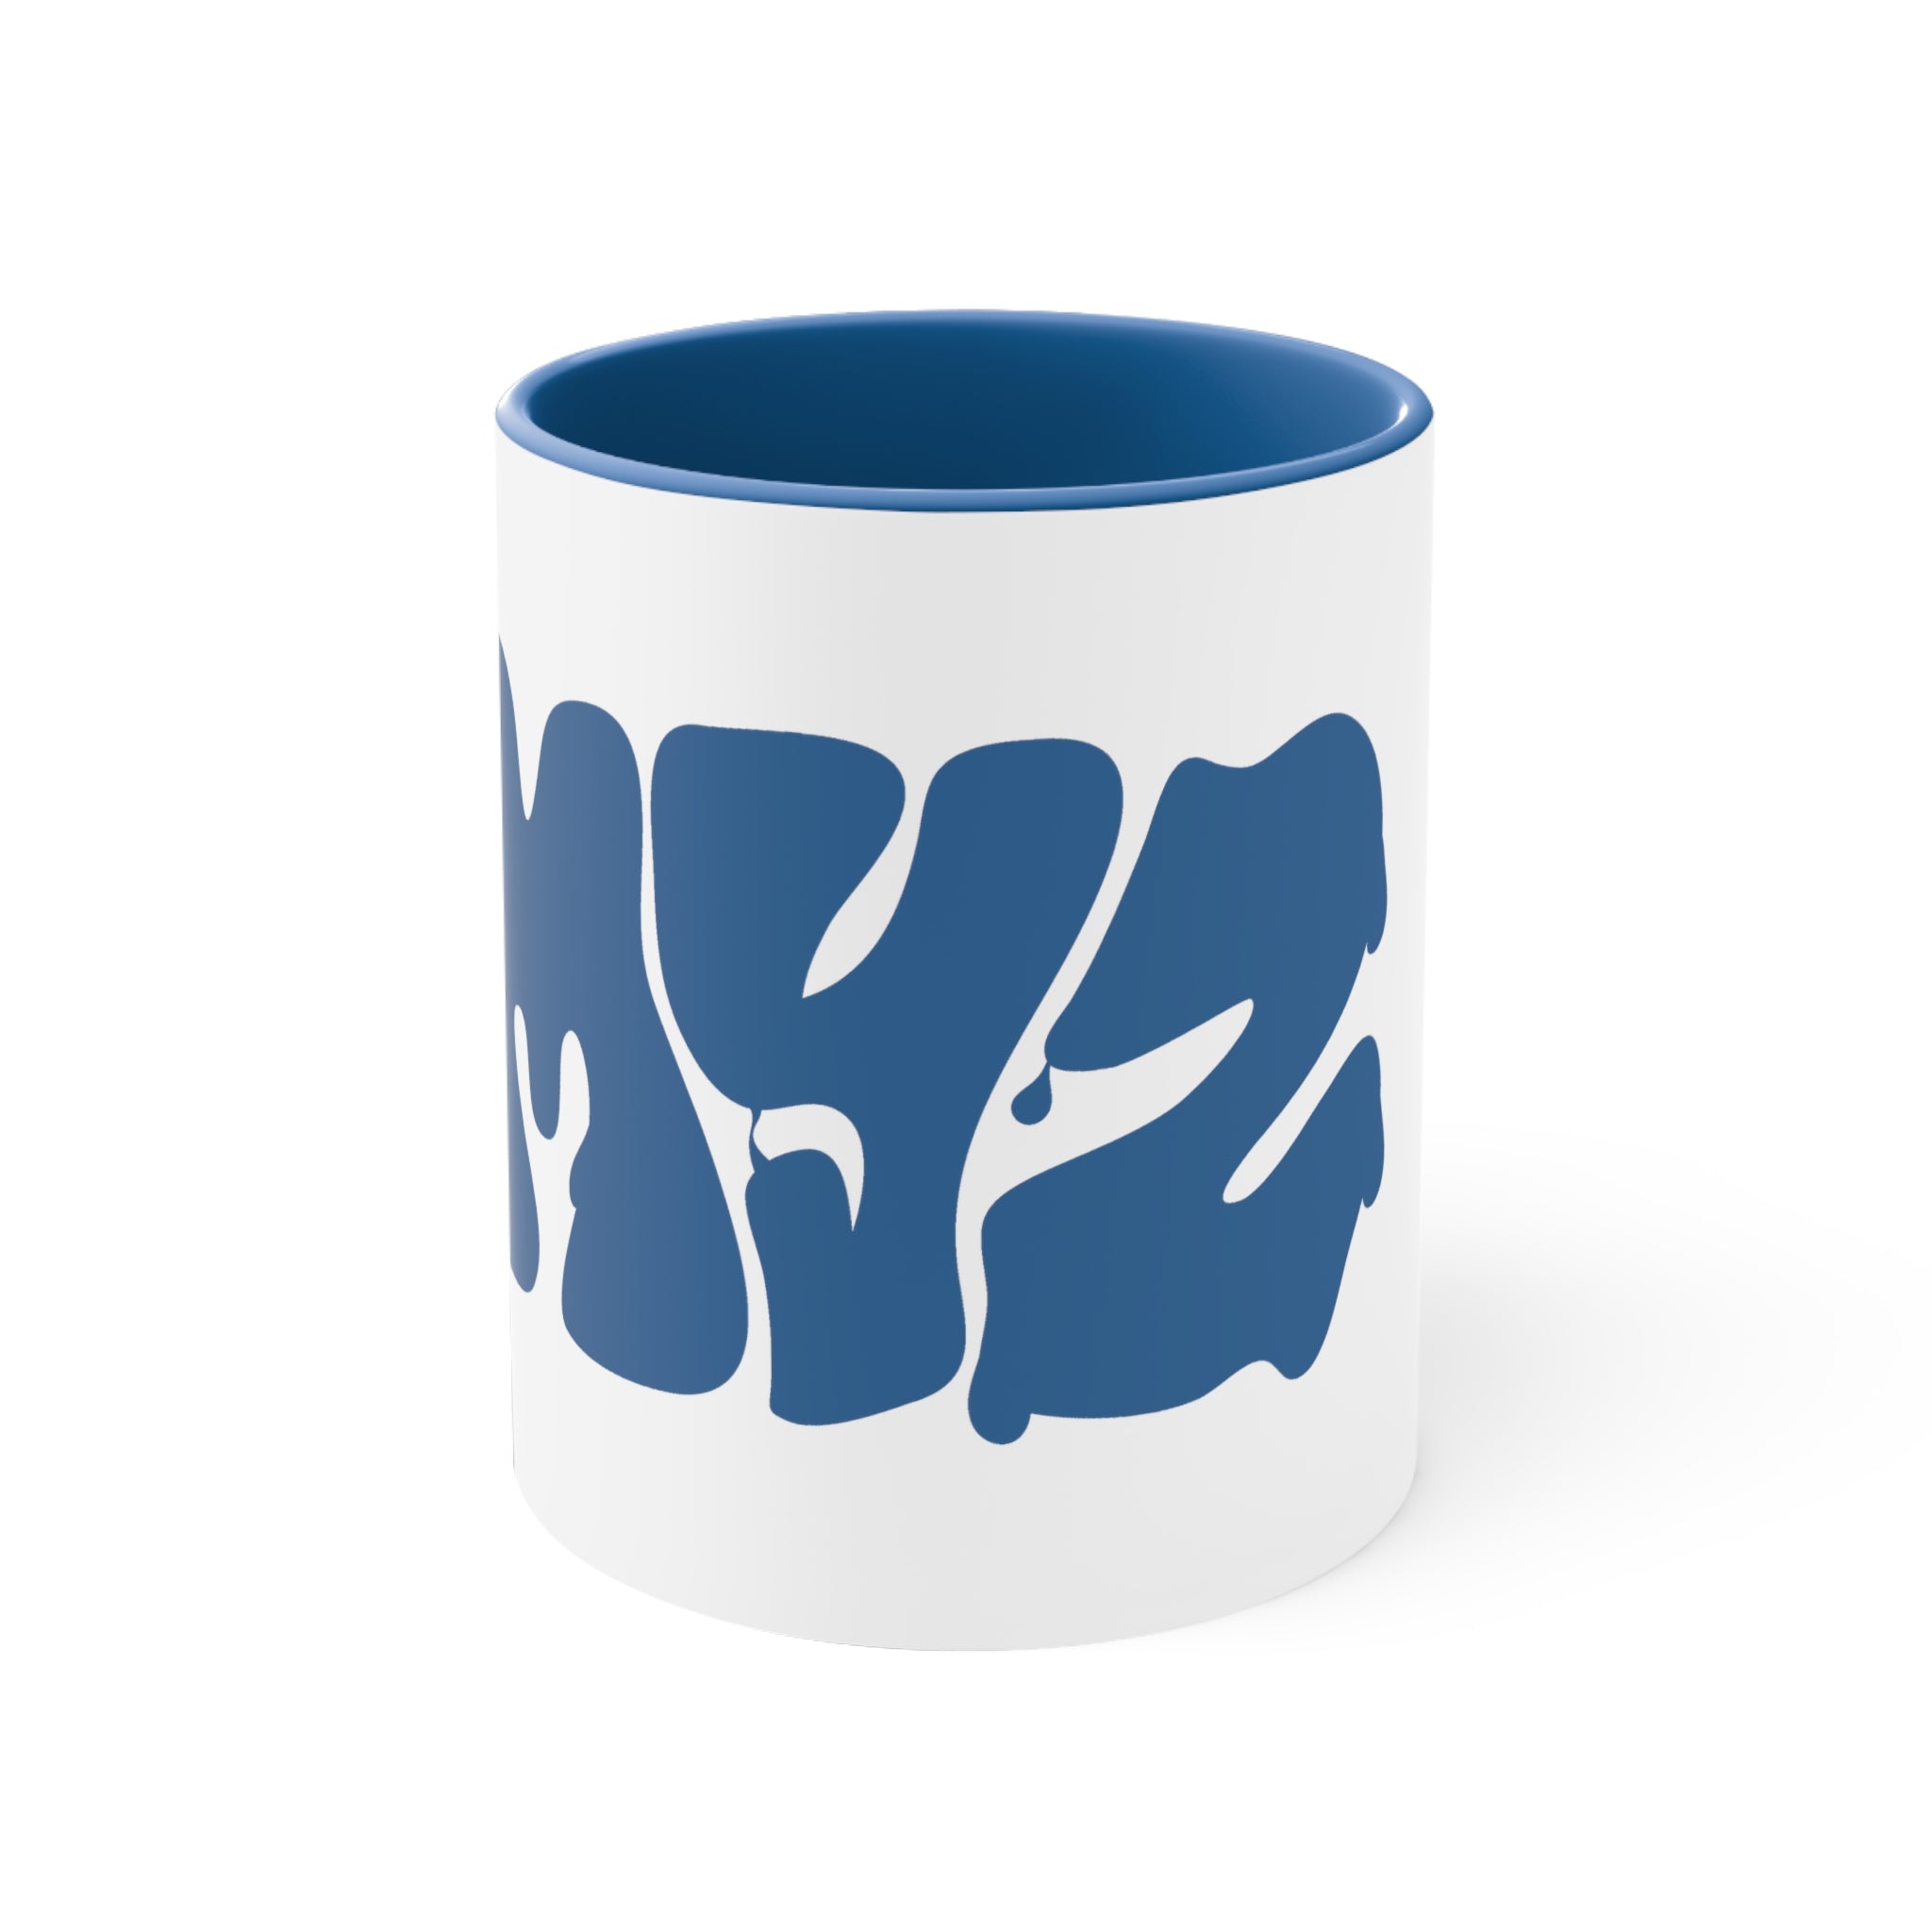 IMY2-Toned Coffee Mug